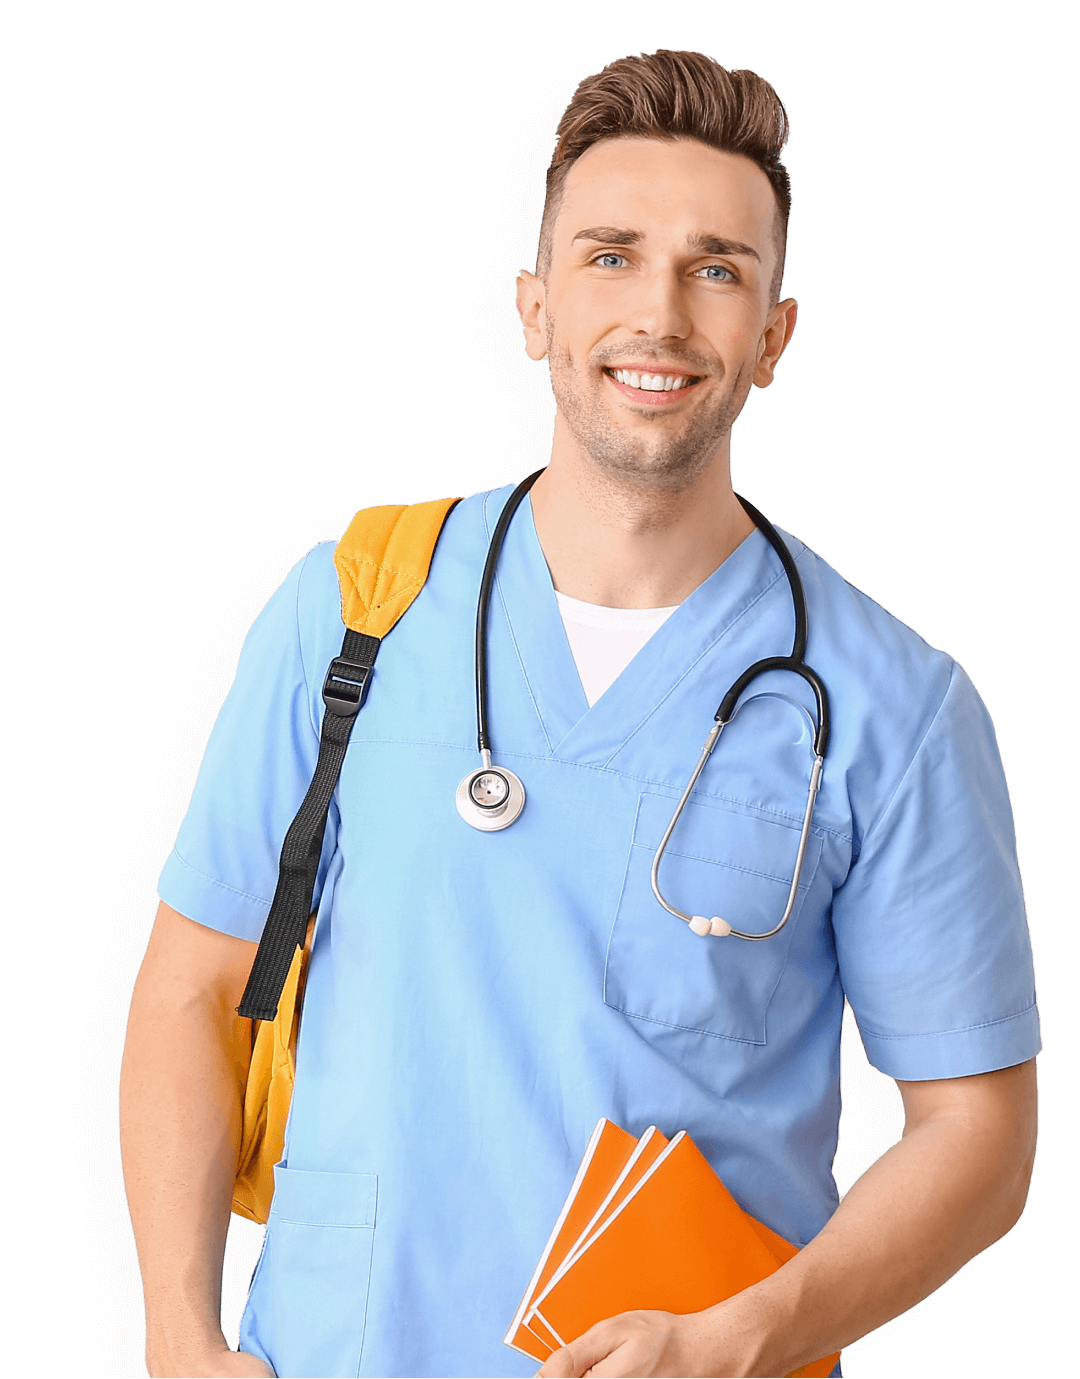 Pulmonary-Medical Student professional